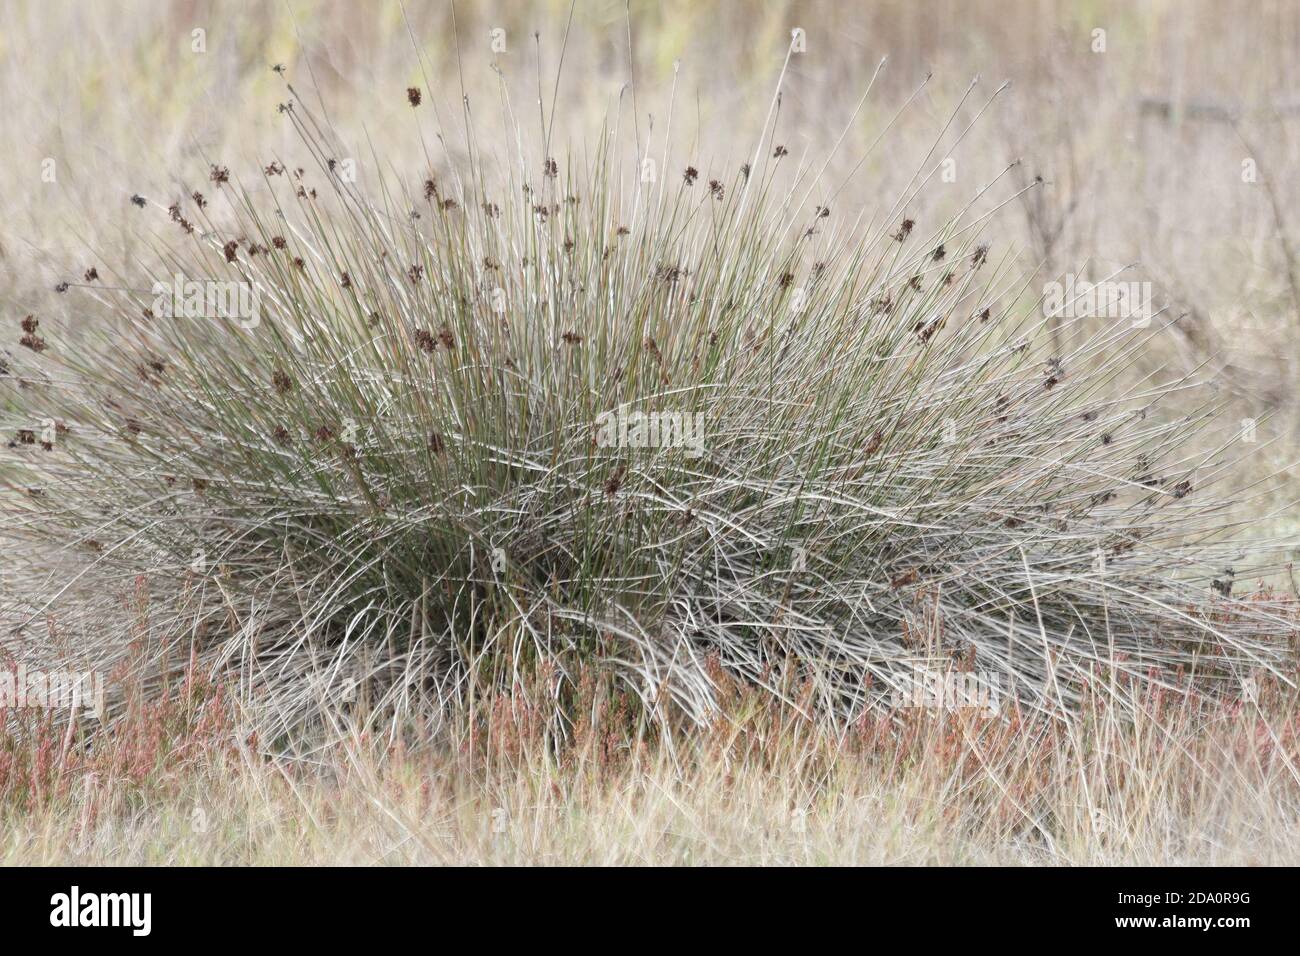 Juncus acutus, the spiny rush, sharp rush or sharp-pointed rush. Guadalhorce nature reserve, Málaga, Andalusia, Spain. Stock Photo